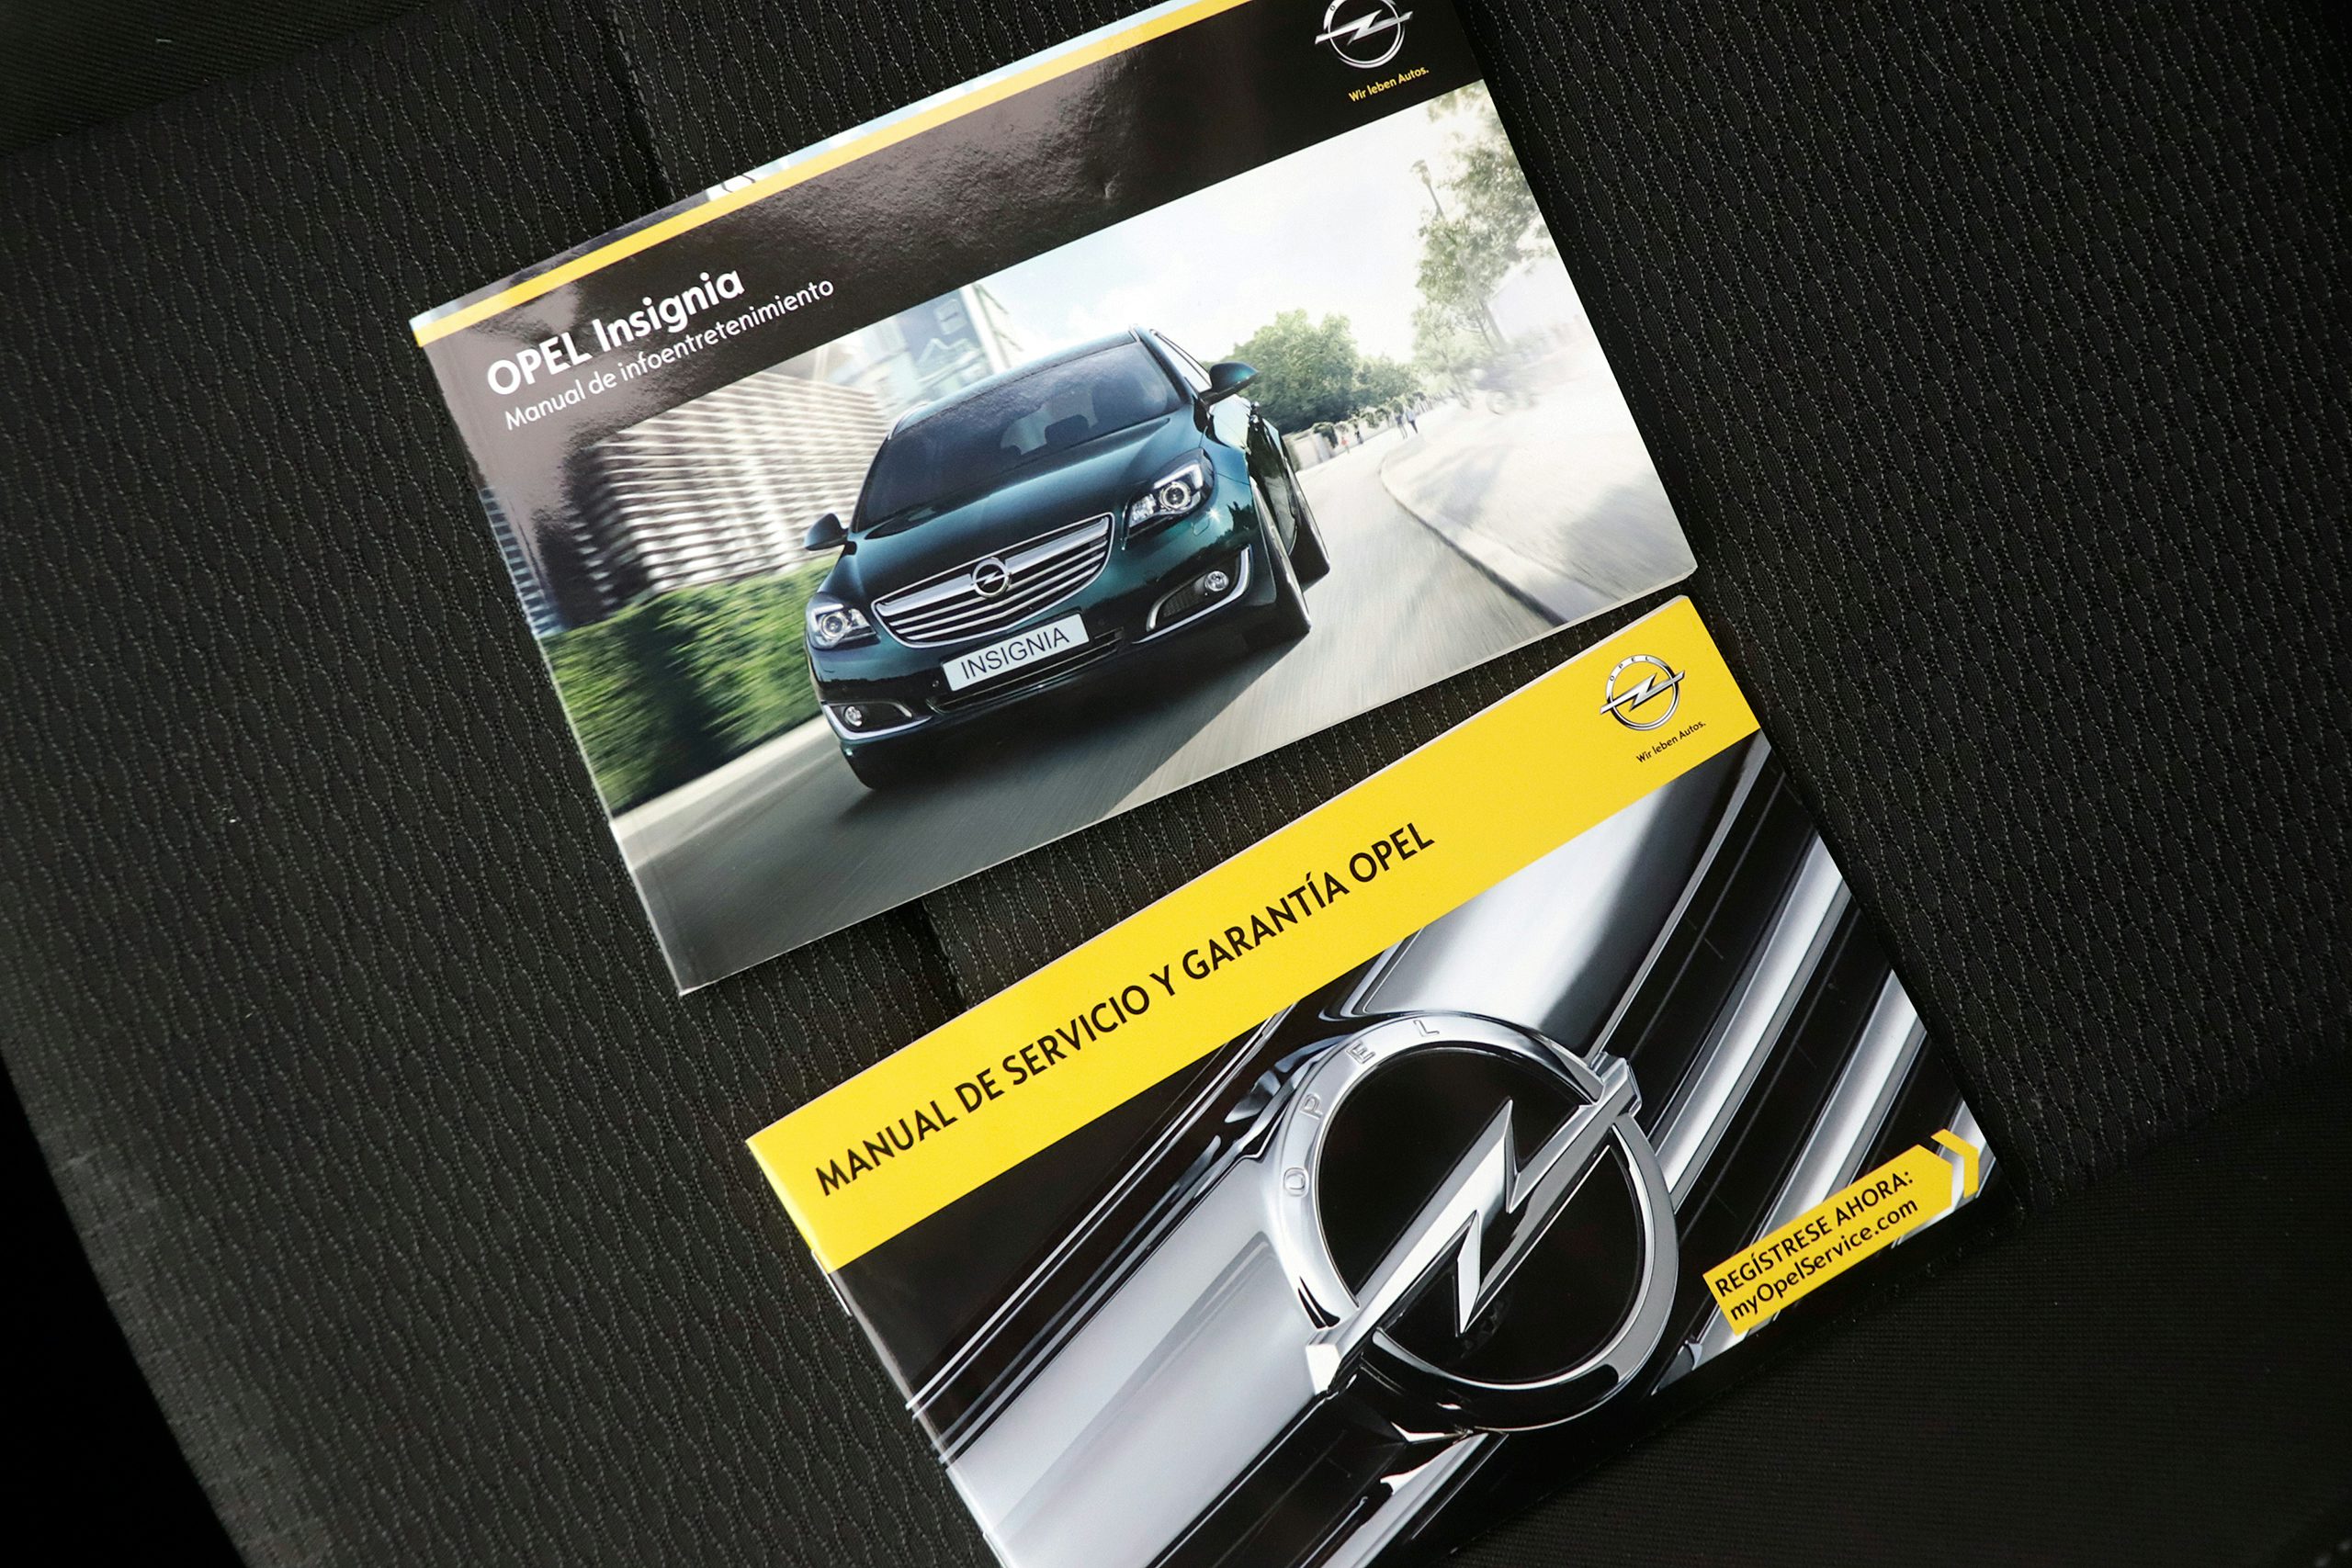 Opel Insignia 2.0 CDTi 140 ecoFlex Business 5p - Foto 39